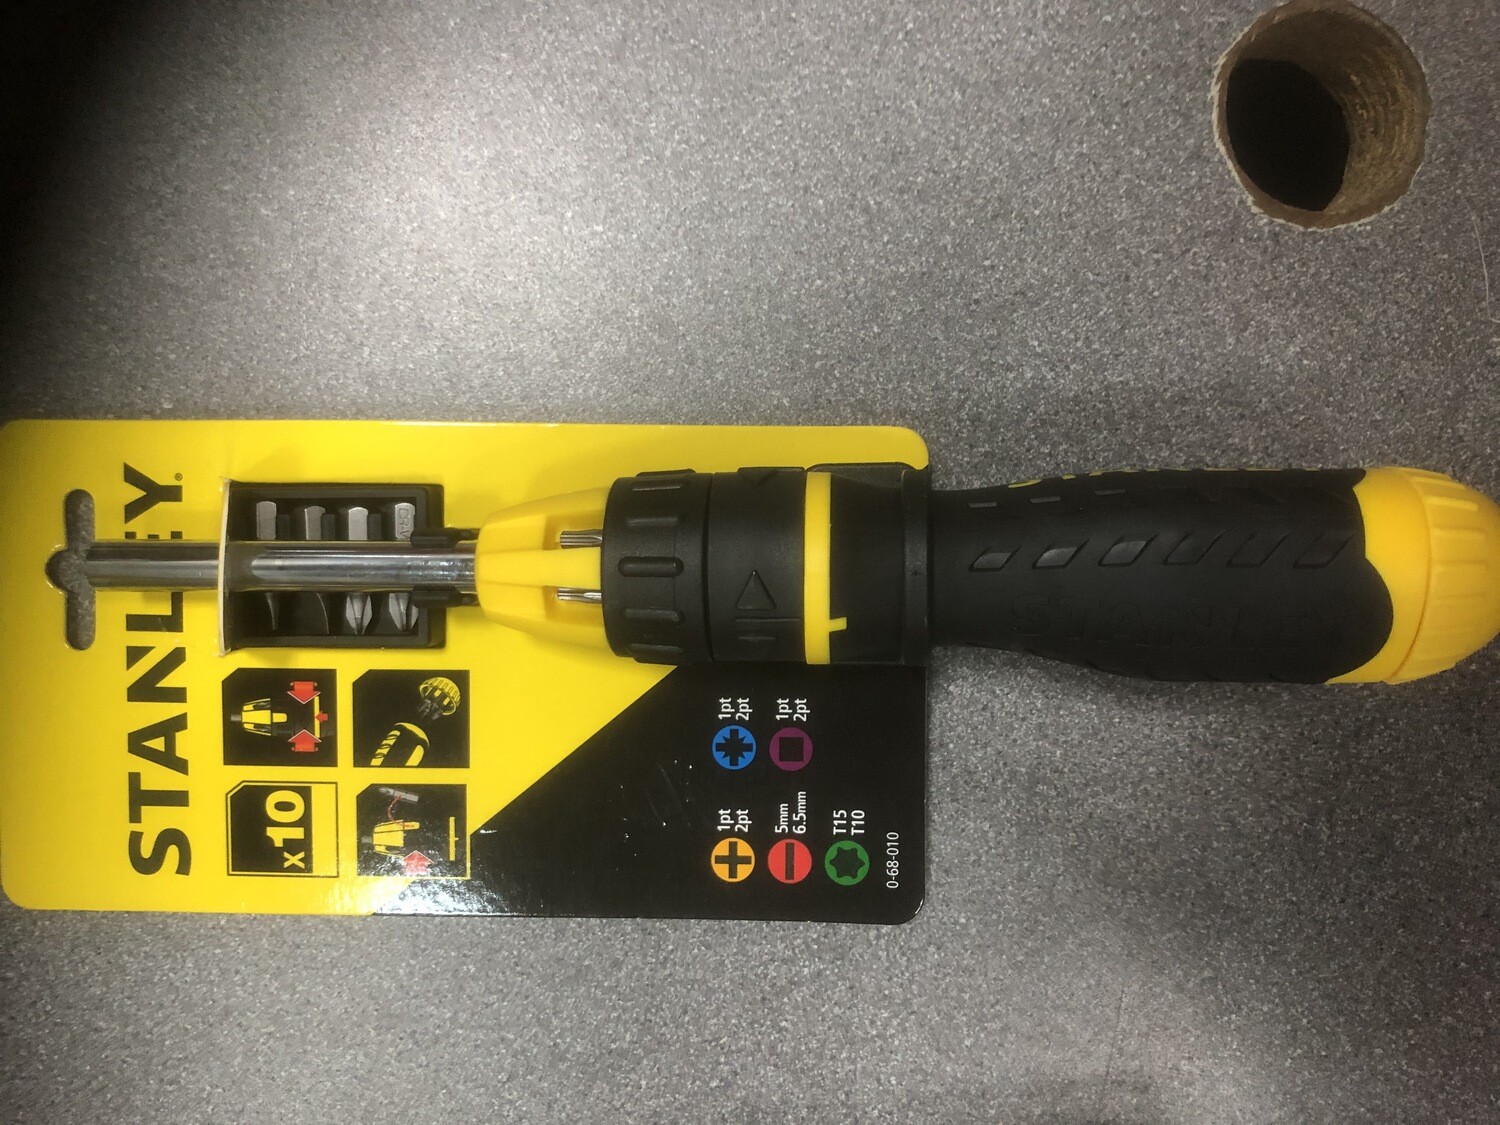 Stanley Multi change screwdriver